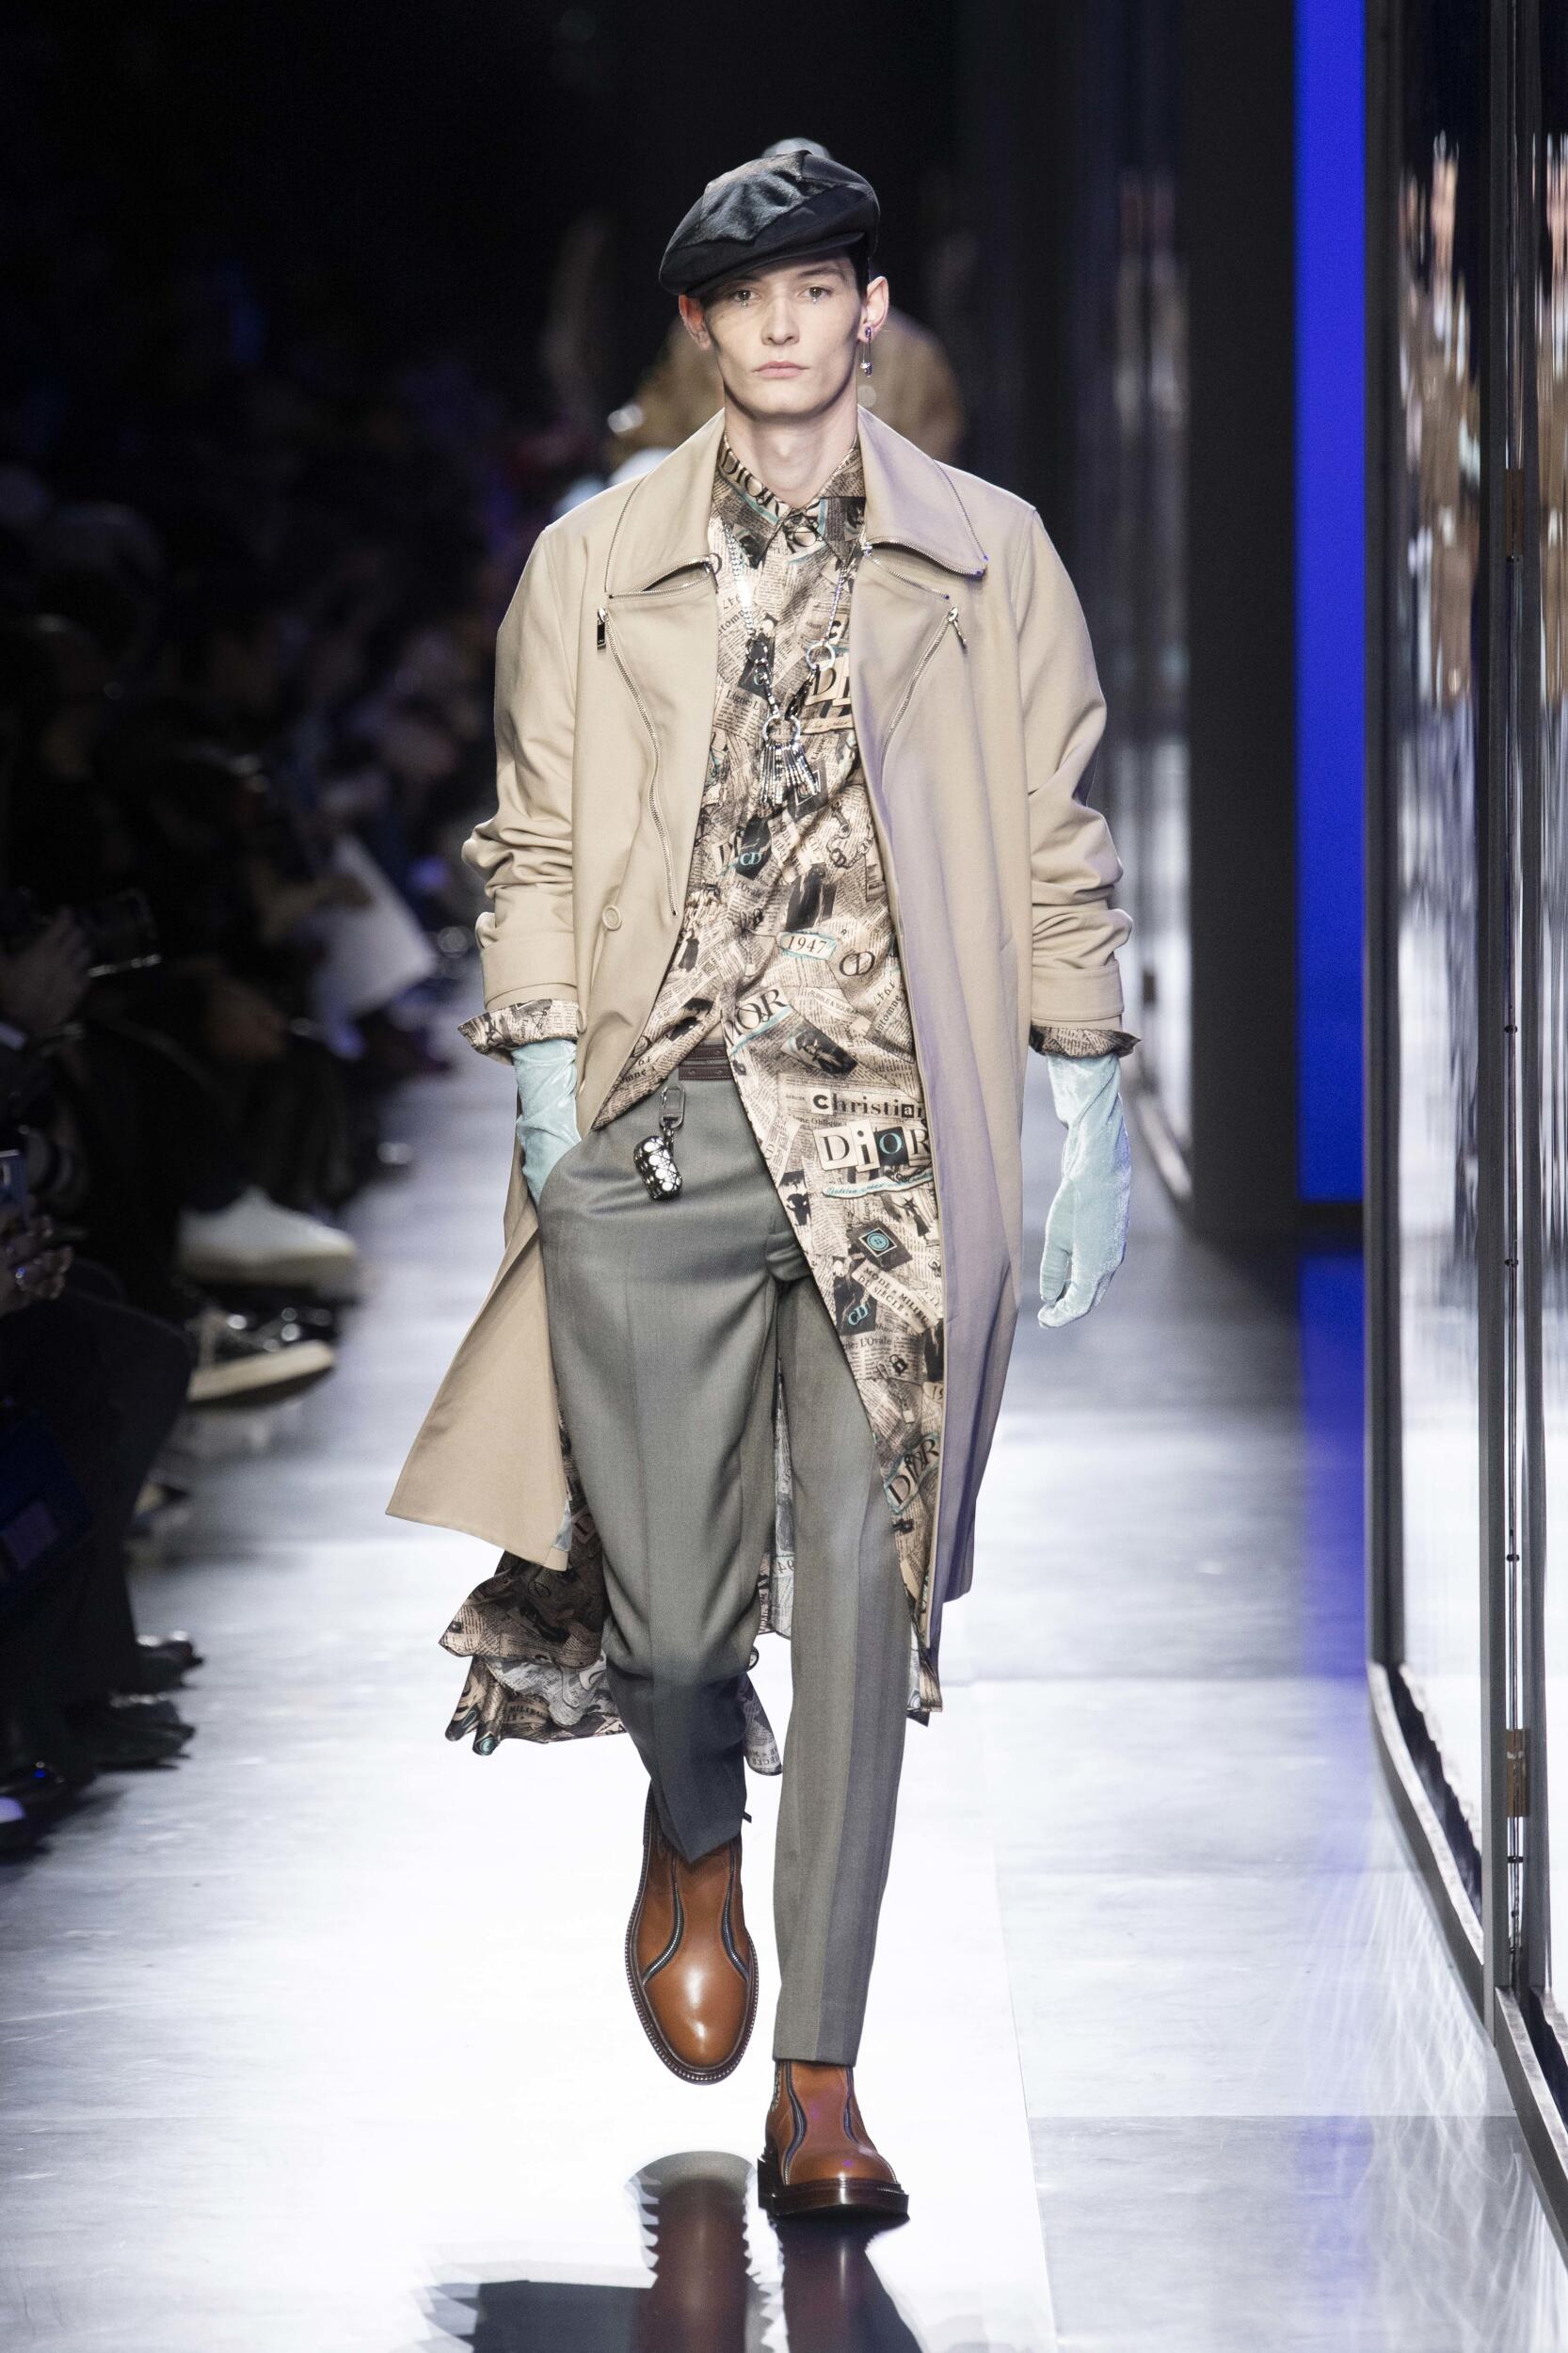 Catwalk Dior Man Fashion Show Winter 2020